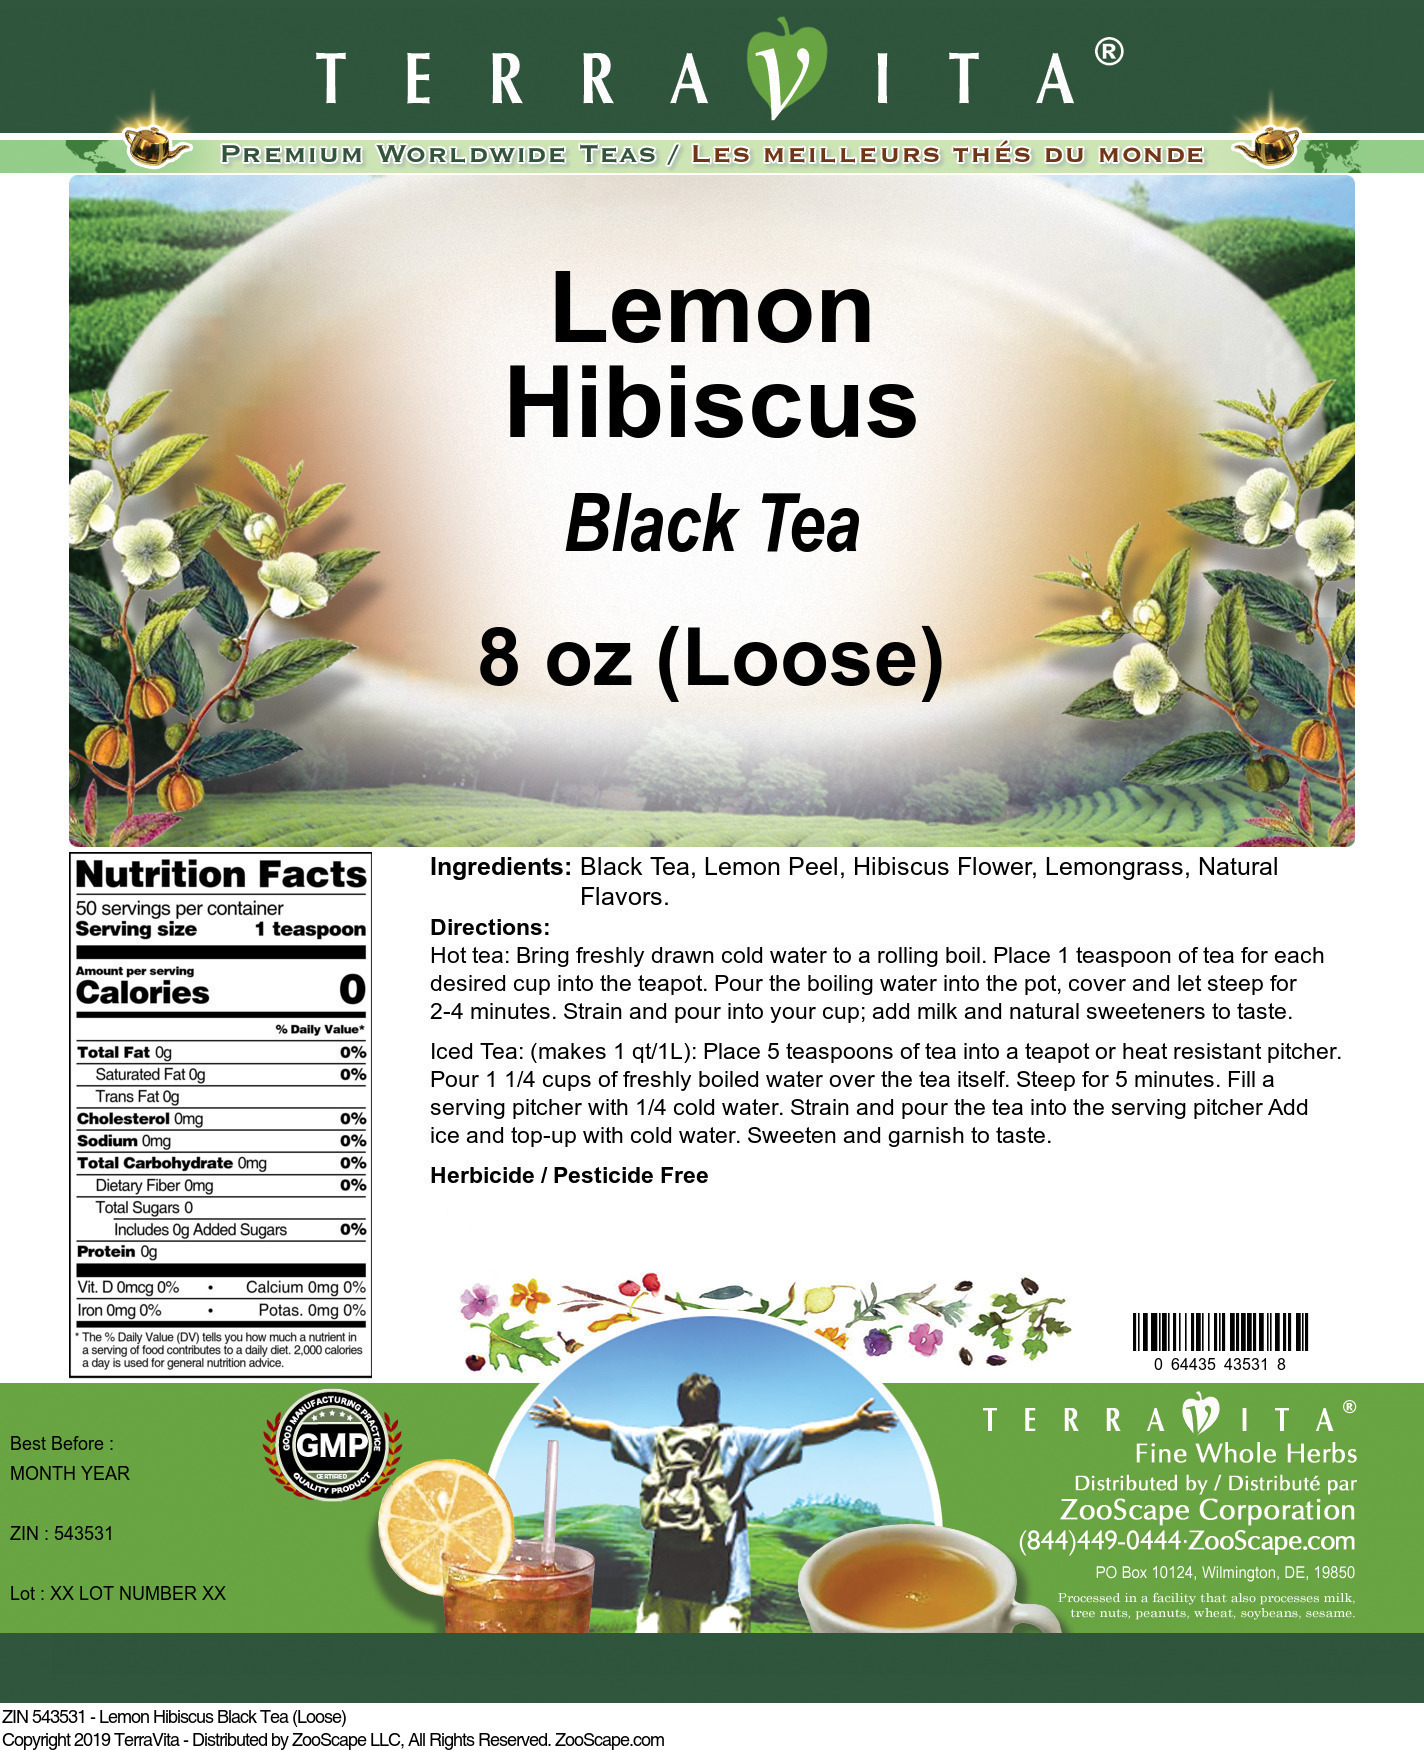 Lemon Hibiscus Black Tea (Loose) - Label